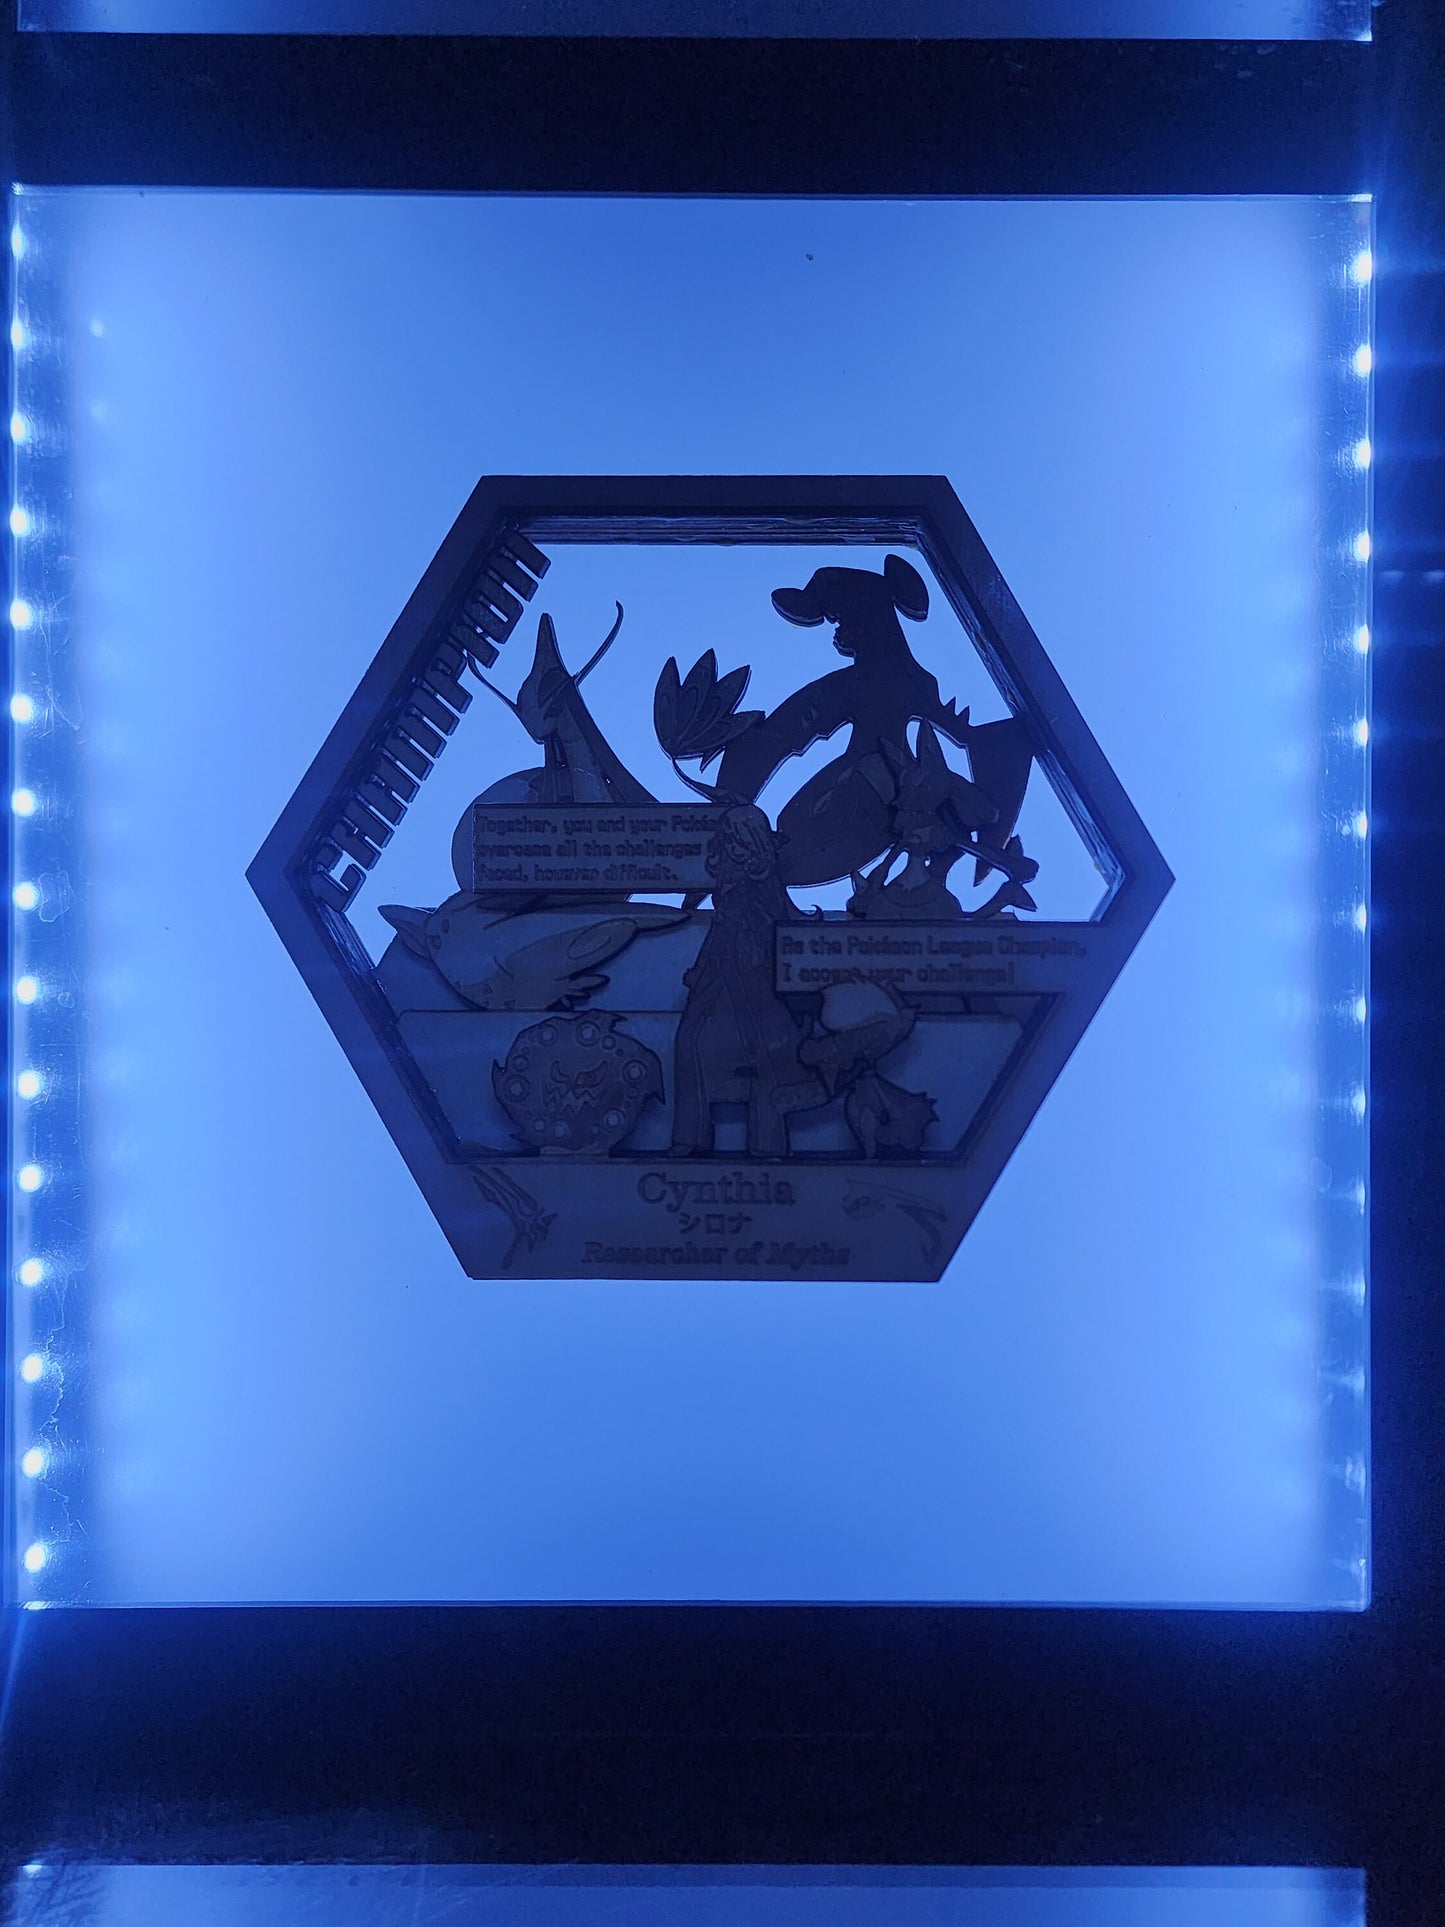 Customizable Pokemon Gift | Pokemon Champion - Cynthia: Researcher of Myths | 3D Wooden Artwork PlaqueArts